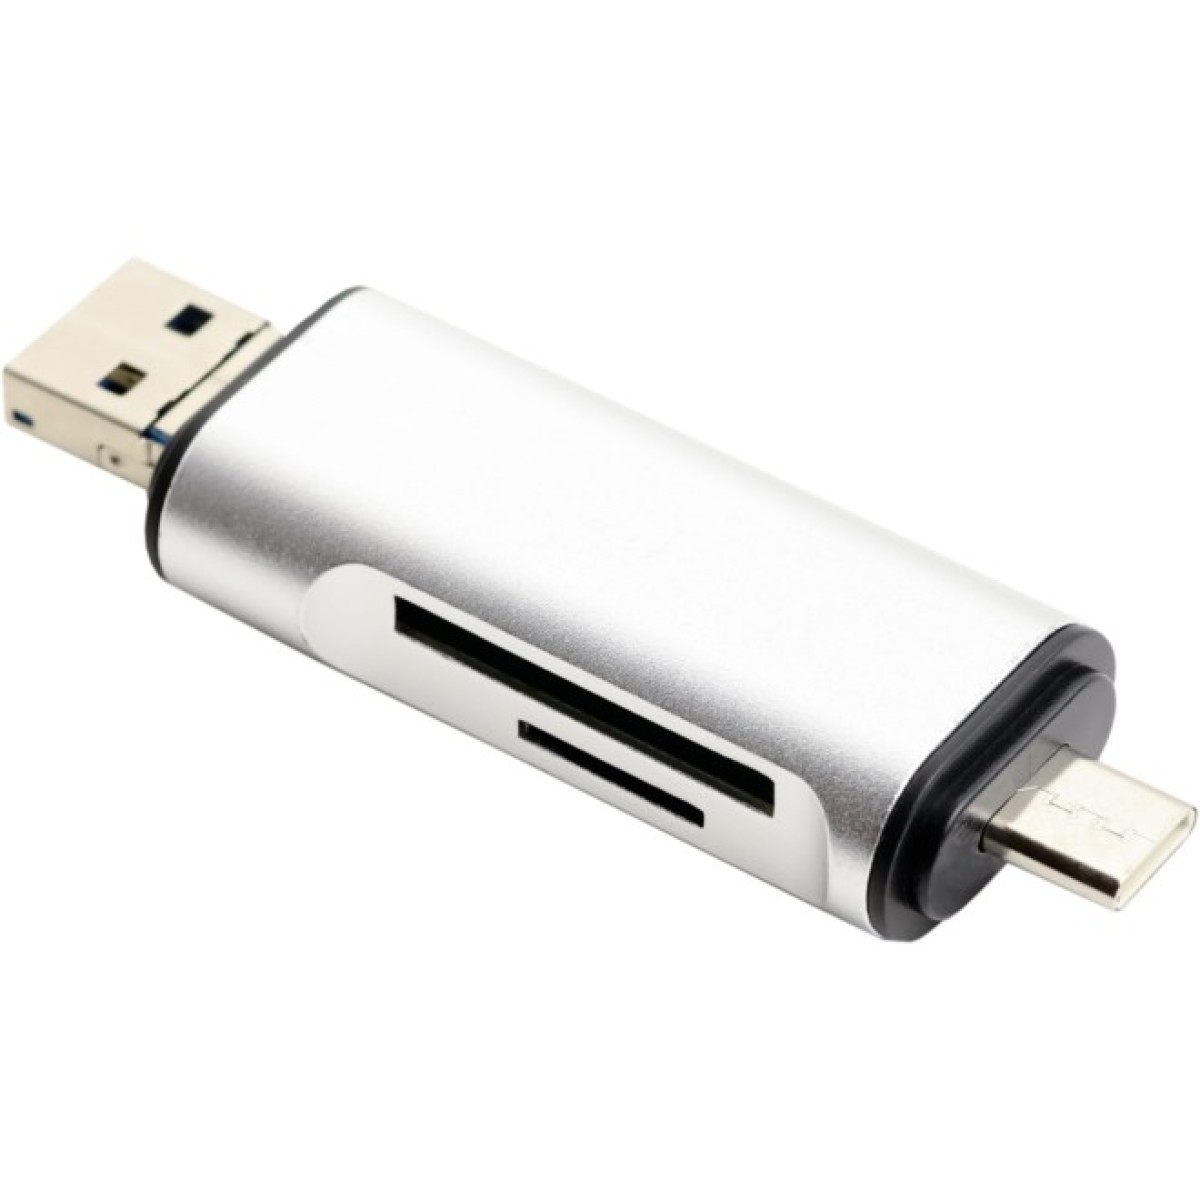 Концентратор XoKo AC-440 Type-C USB 3.0 and MicroUSB/SD Card Reader (XK-AС-440) 256_256.jpg